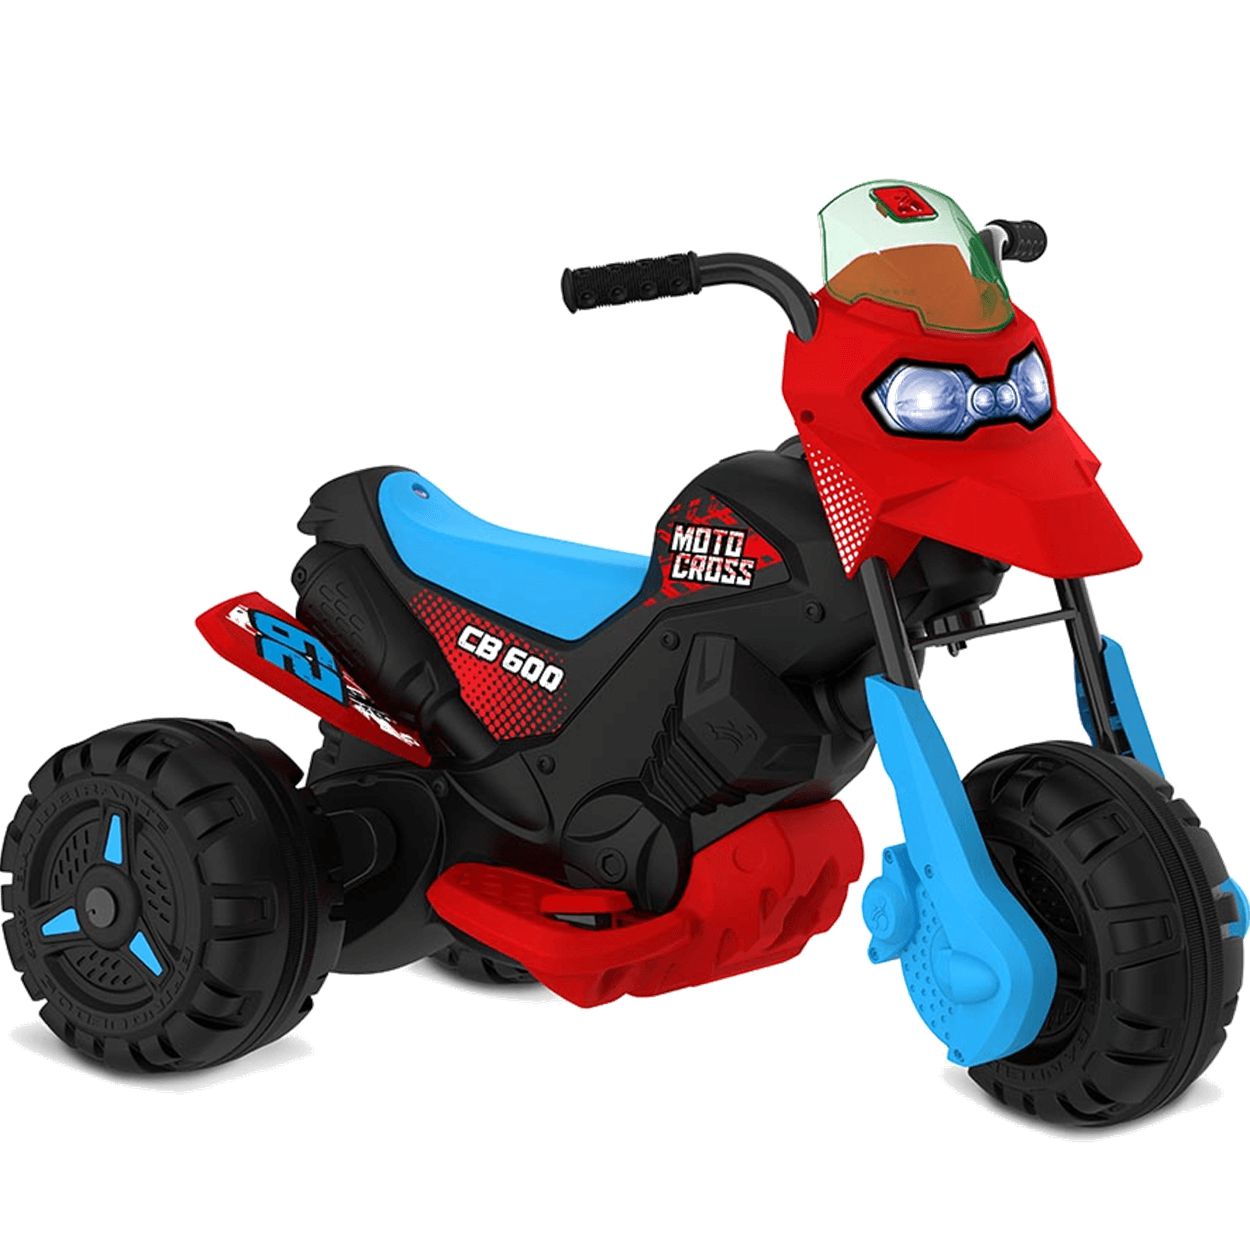 Moto Elétrica Infantil Cross - Vermelho+Preto